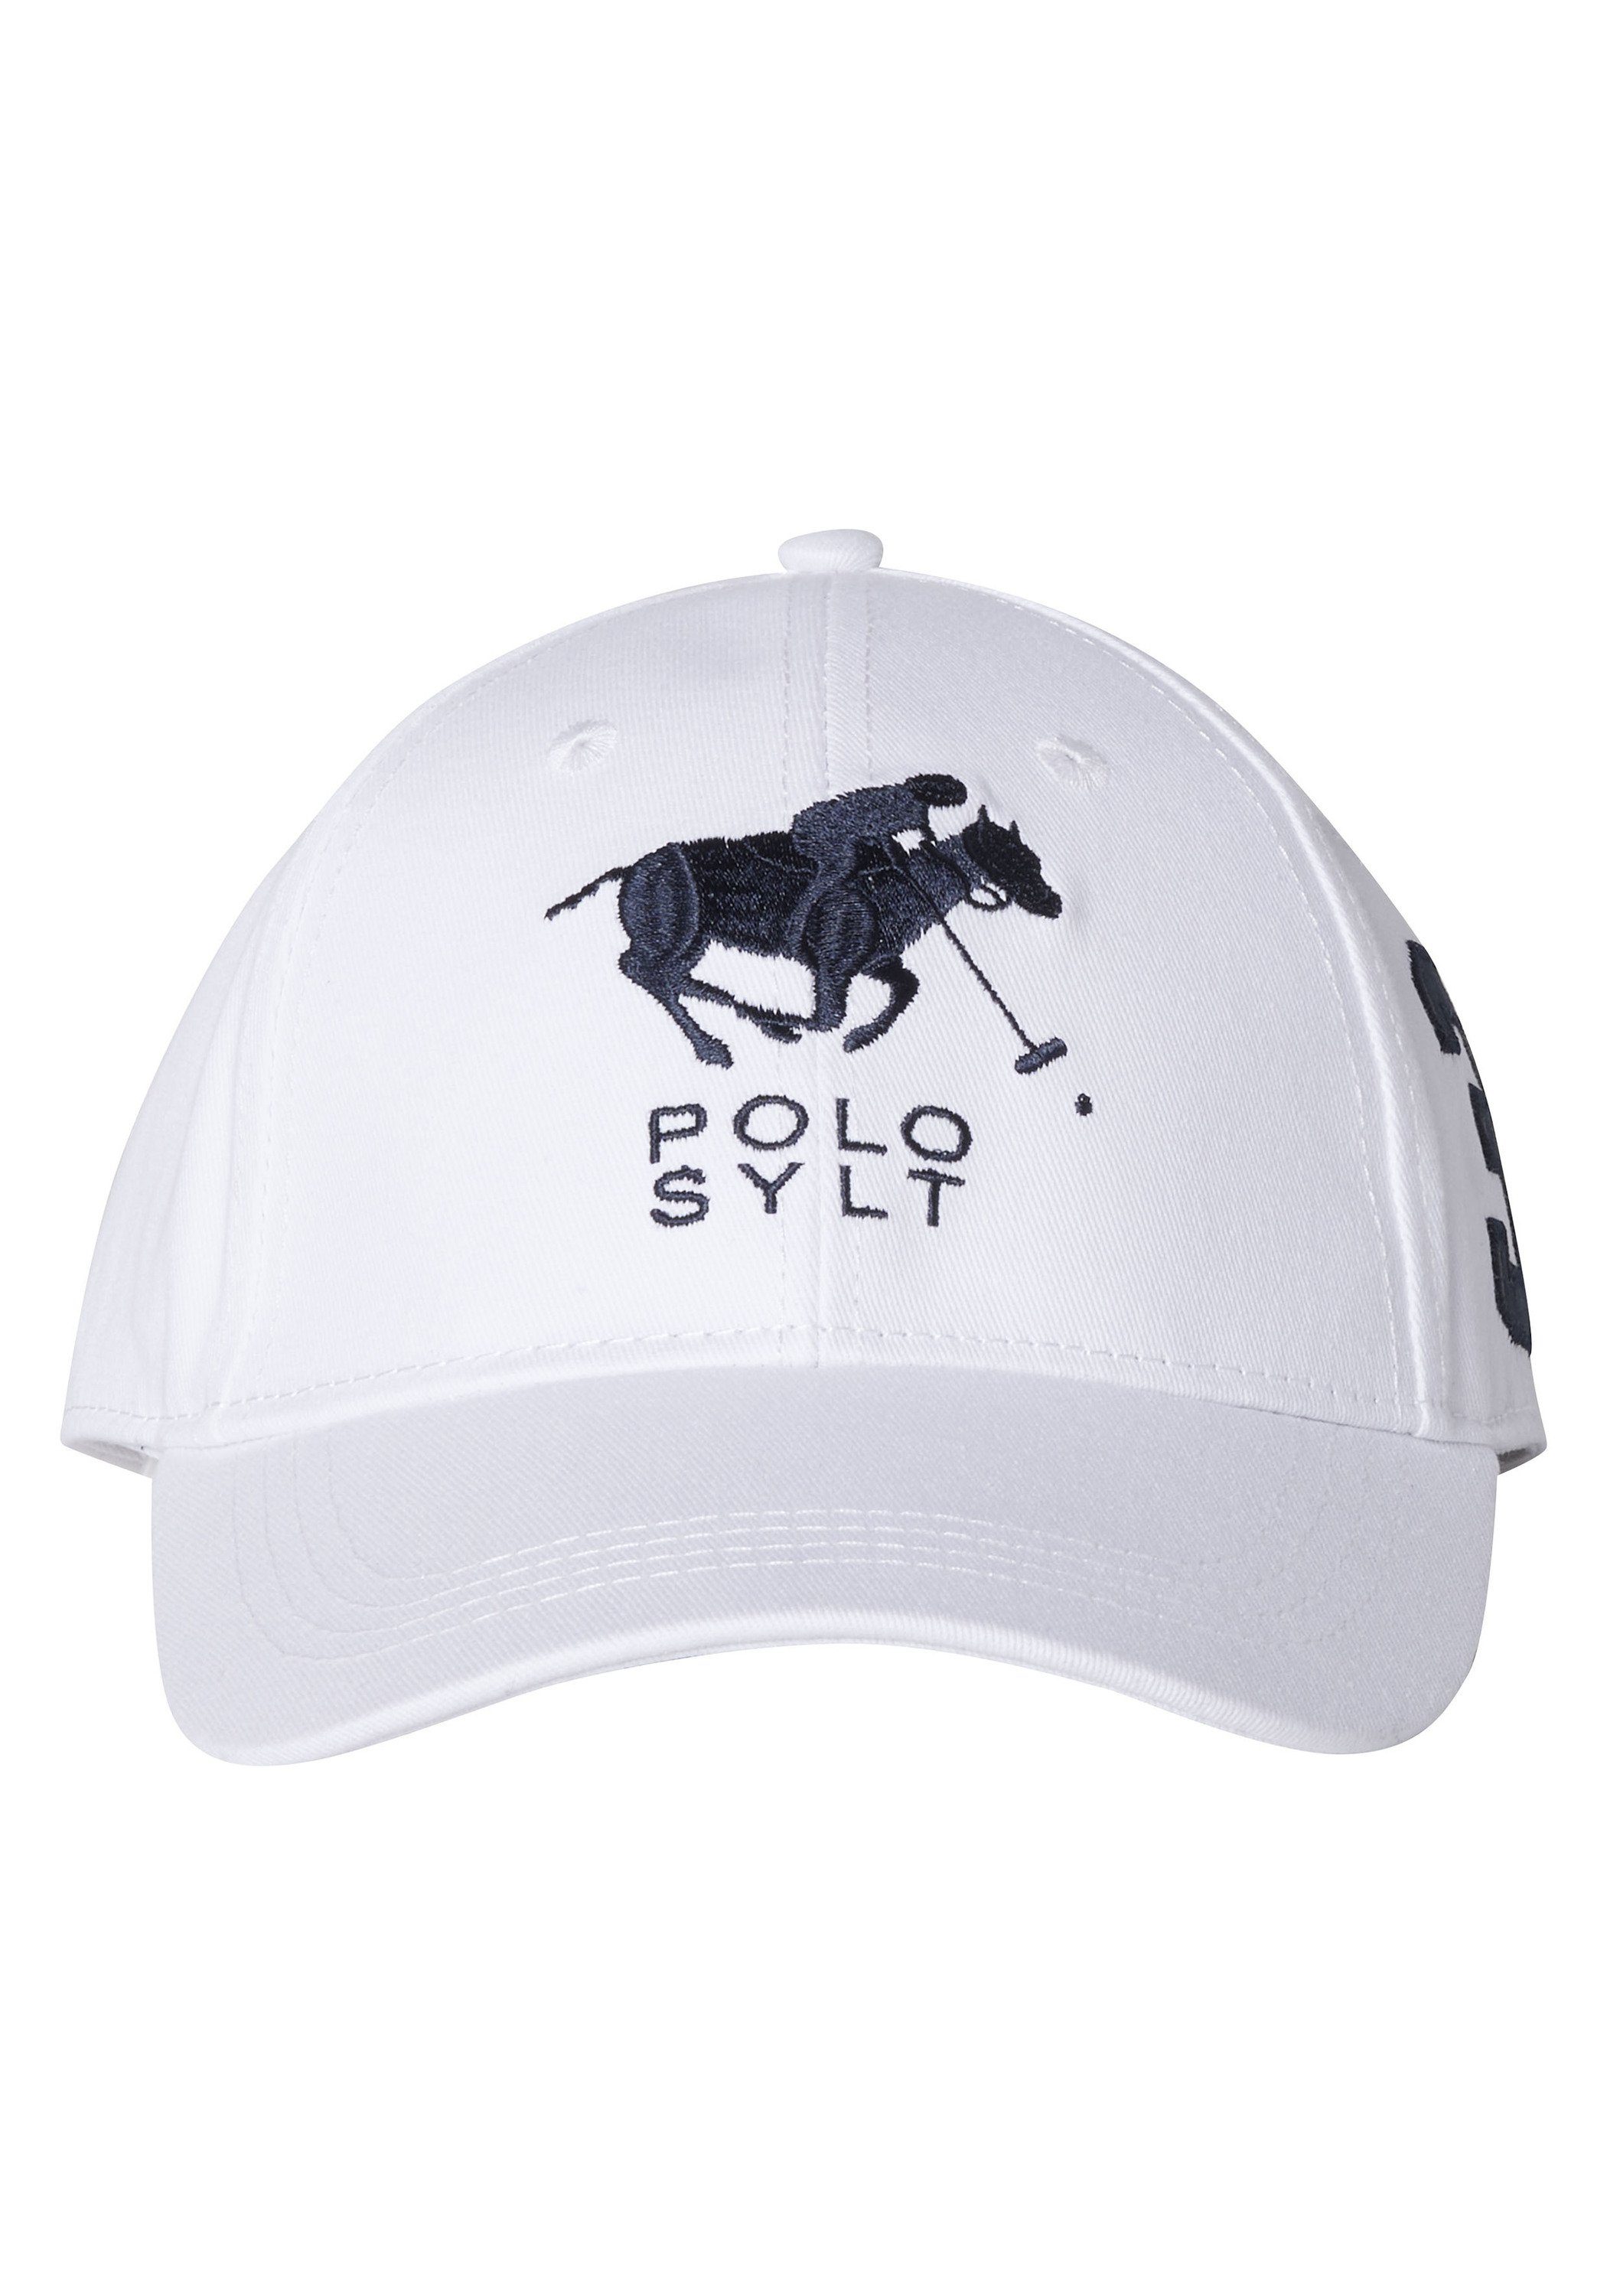 Polo Sylt Baseball Cap im Blue 1048 Dif Wht/Dk Label-Design